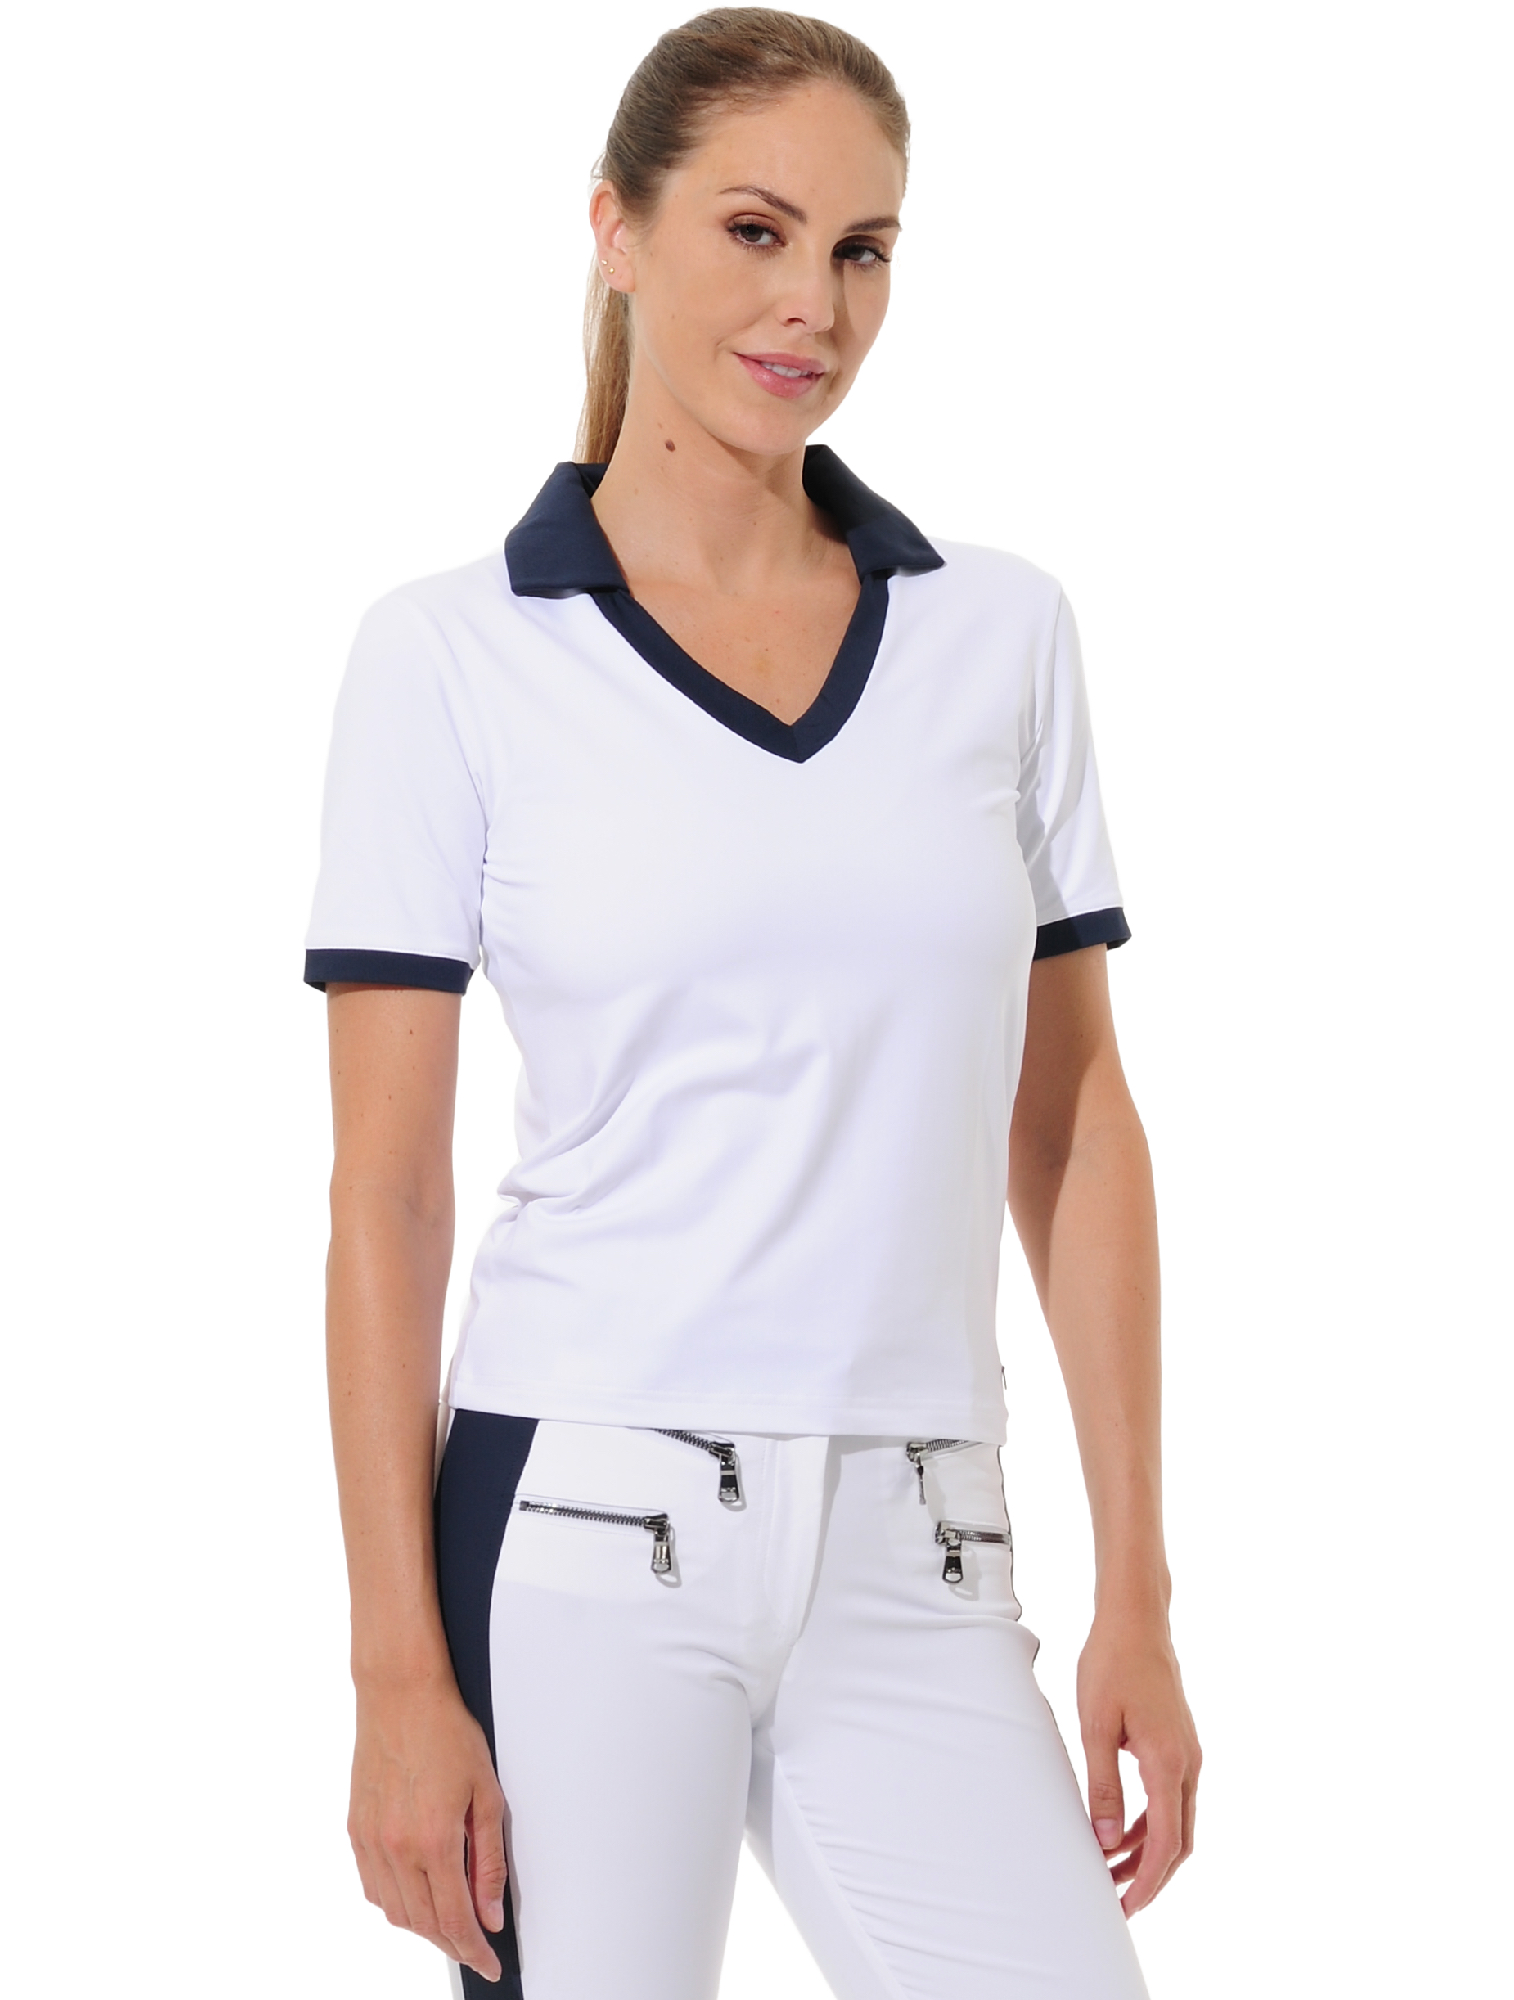 Jersey golf polo shirt white/navy